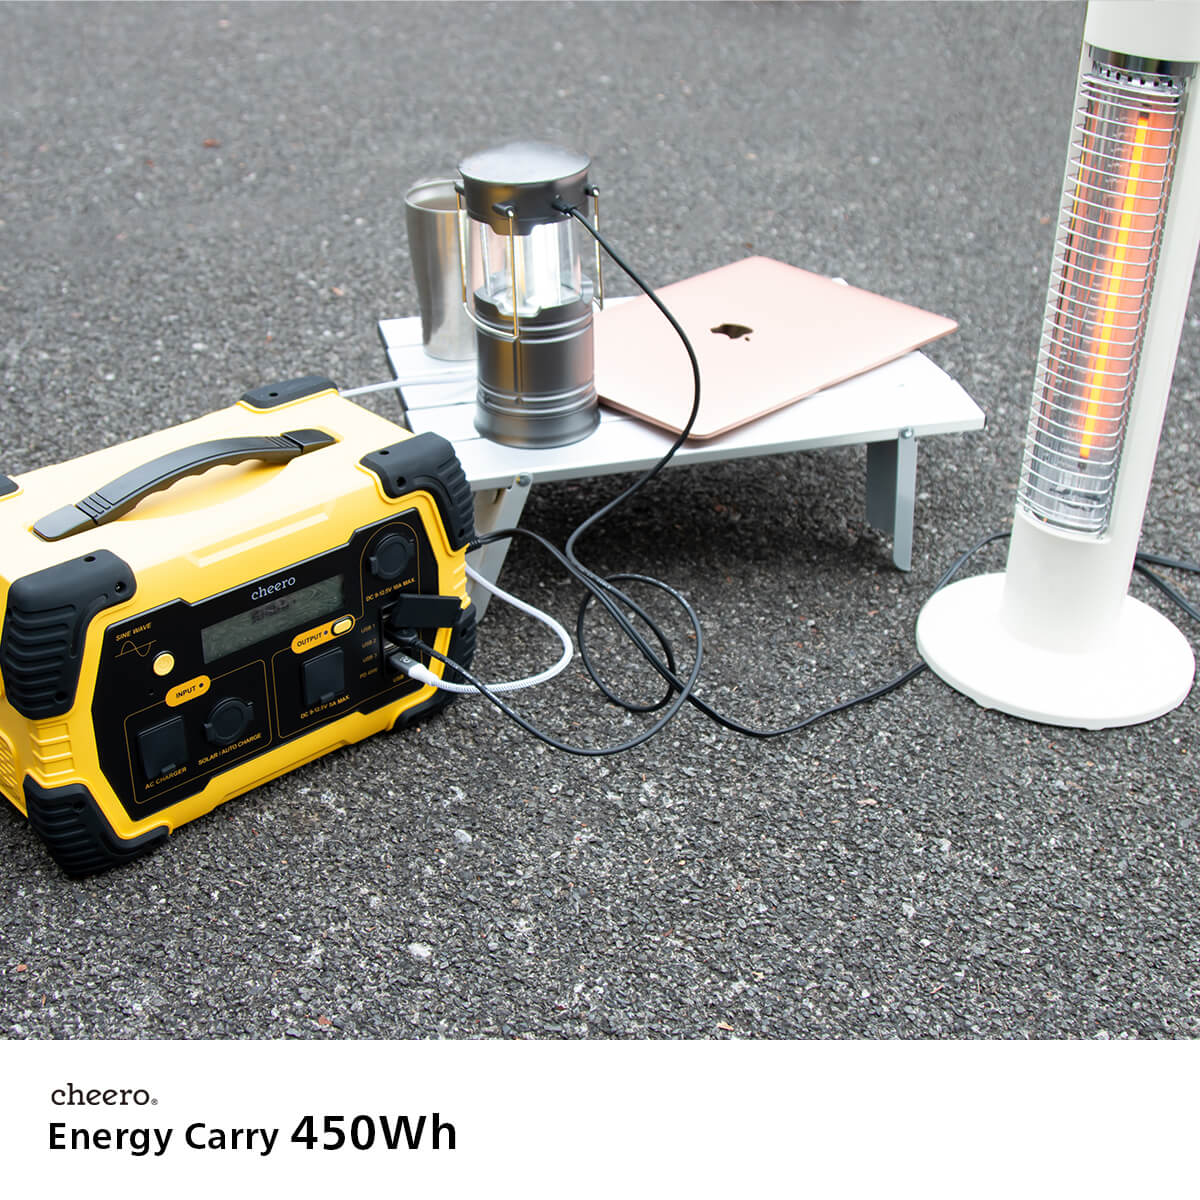 cheero Energy Carry 450Wh – cheero_official